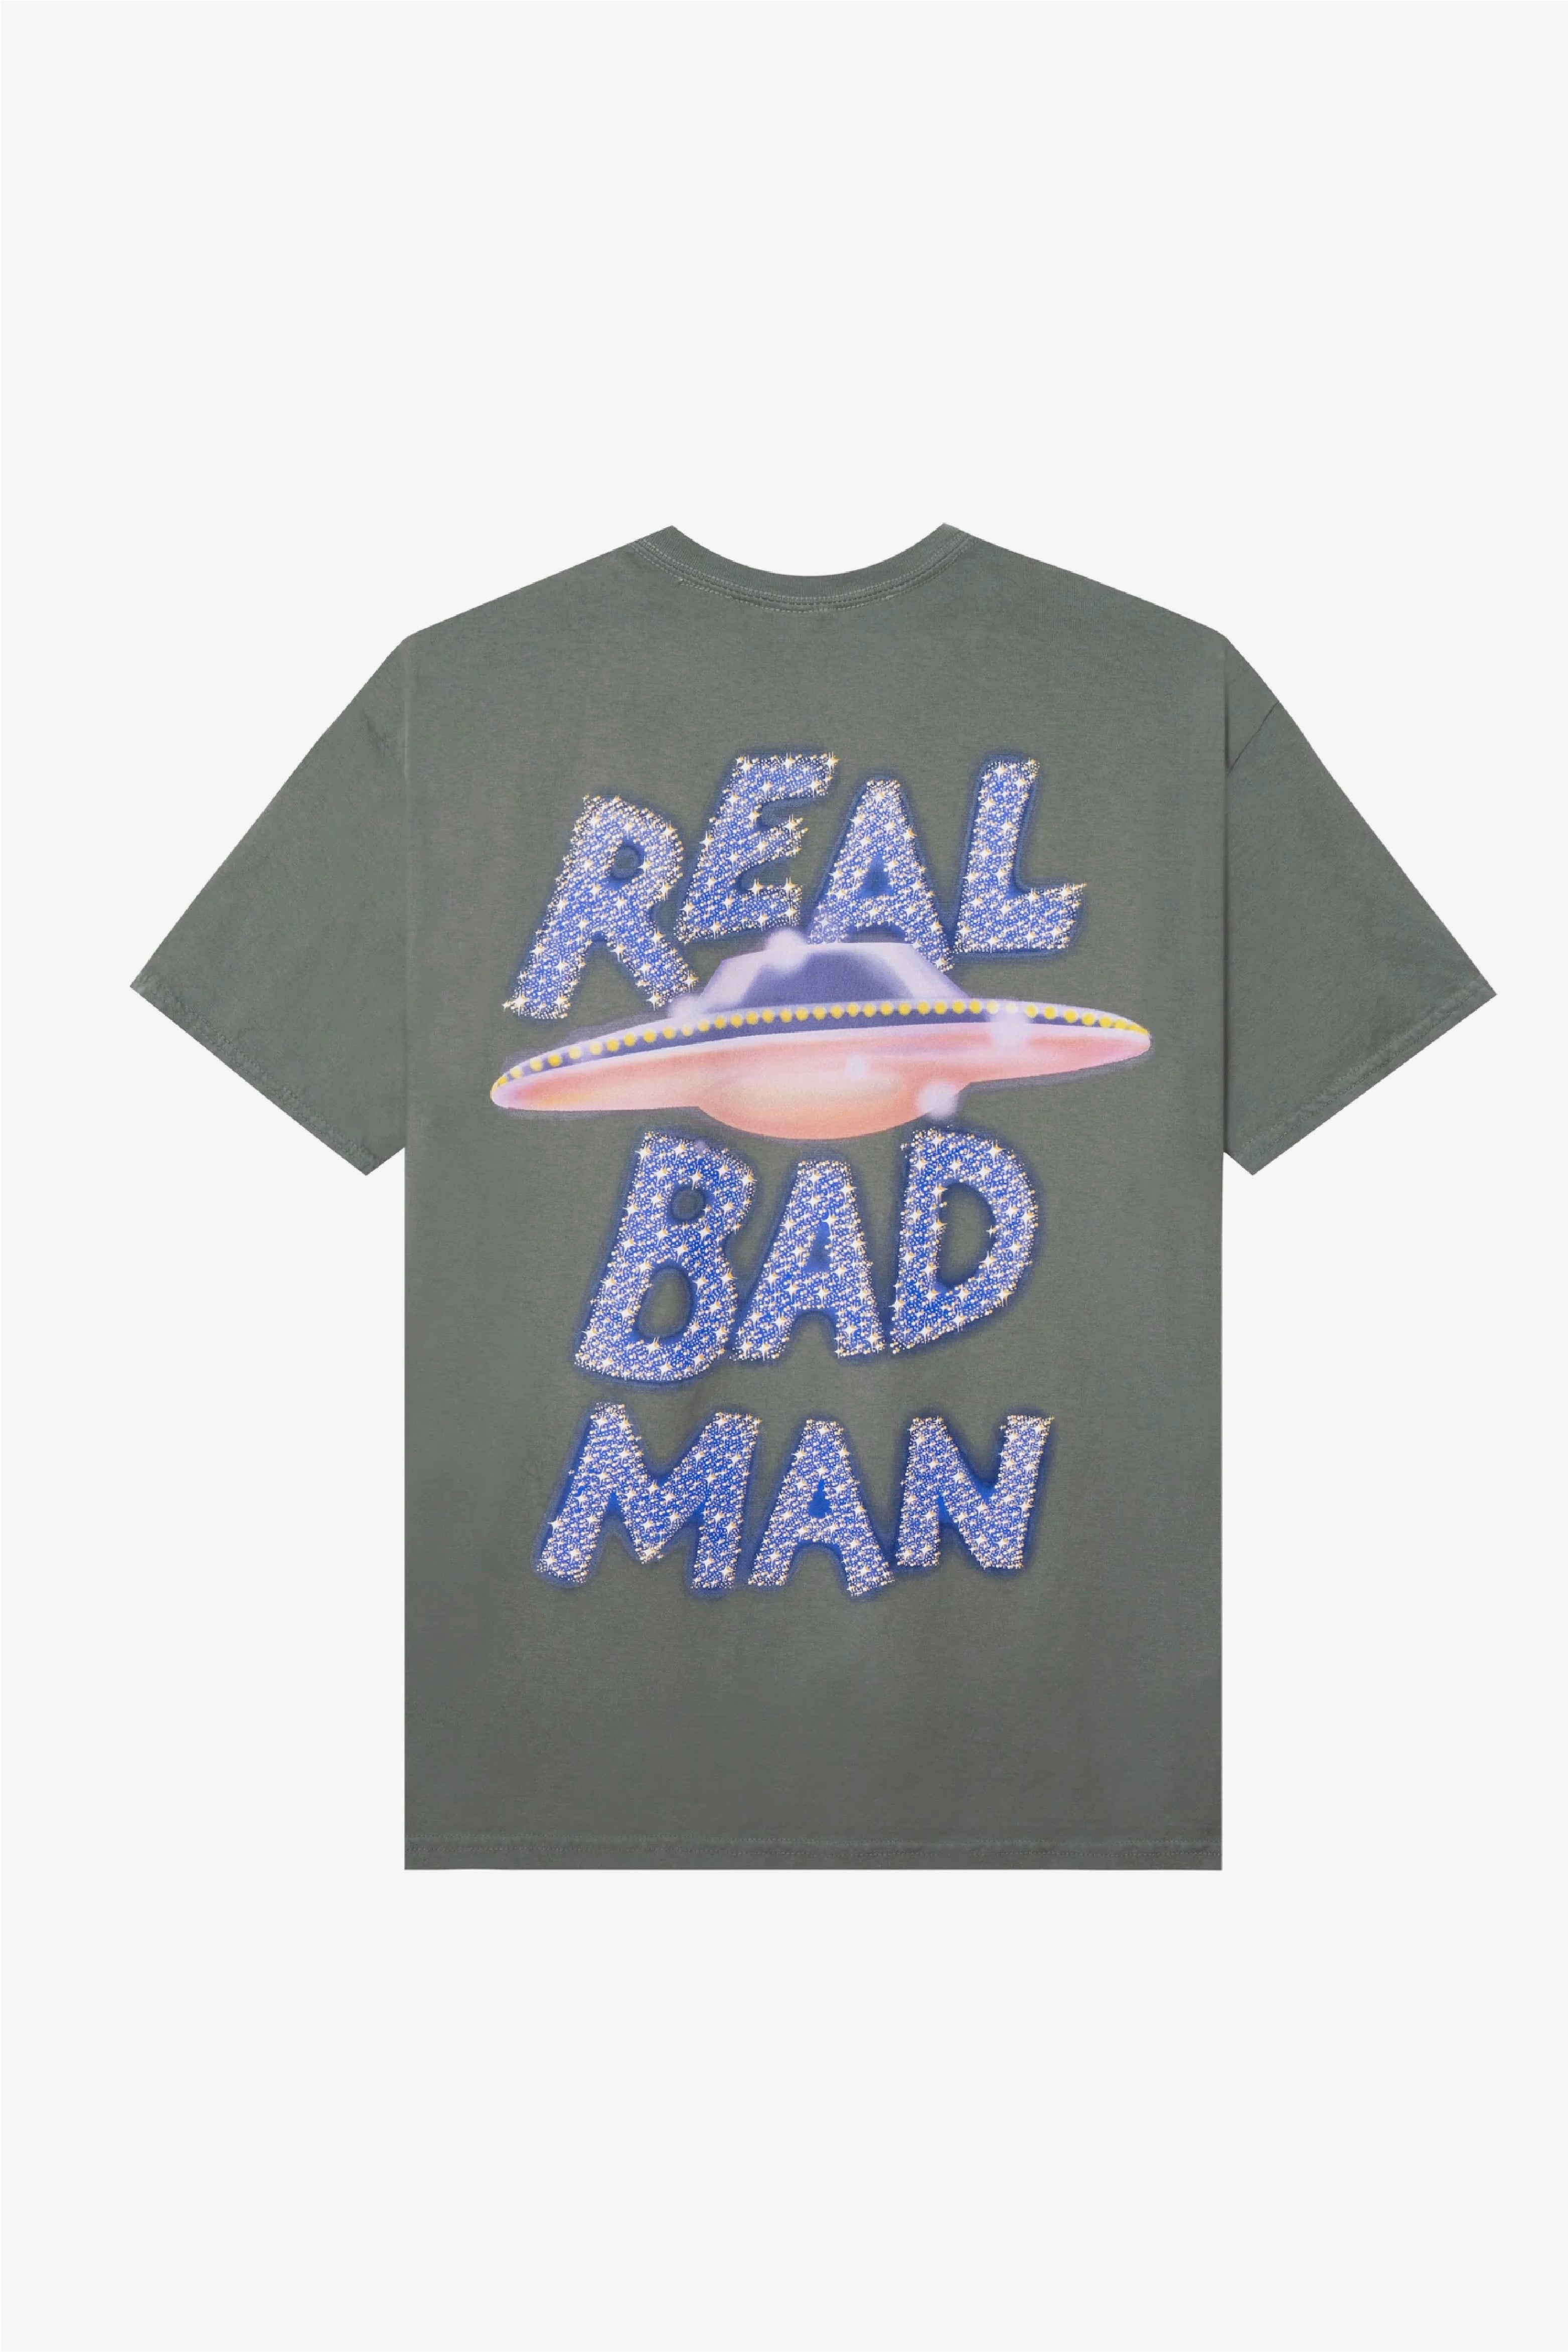 Selectshop FRAME - REAL BAD MAN Saucer Cult Tee T-Shirts Dubai